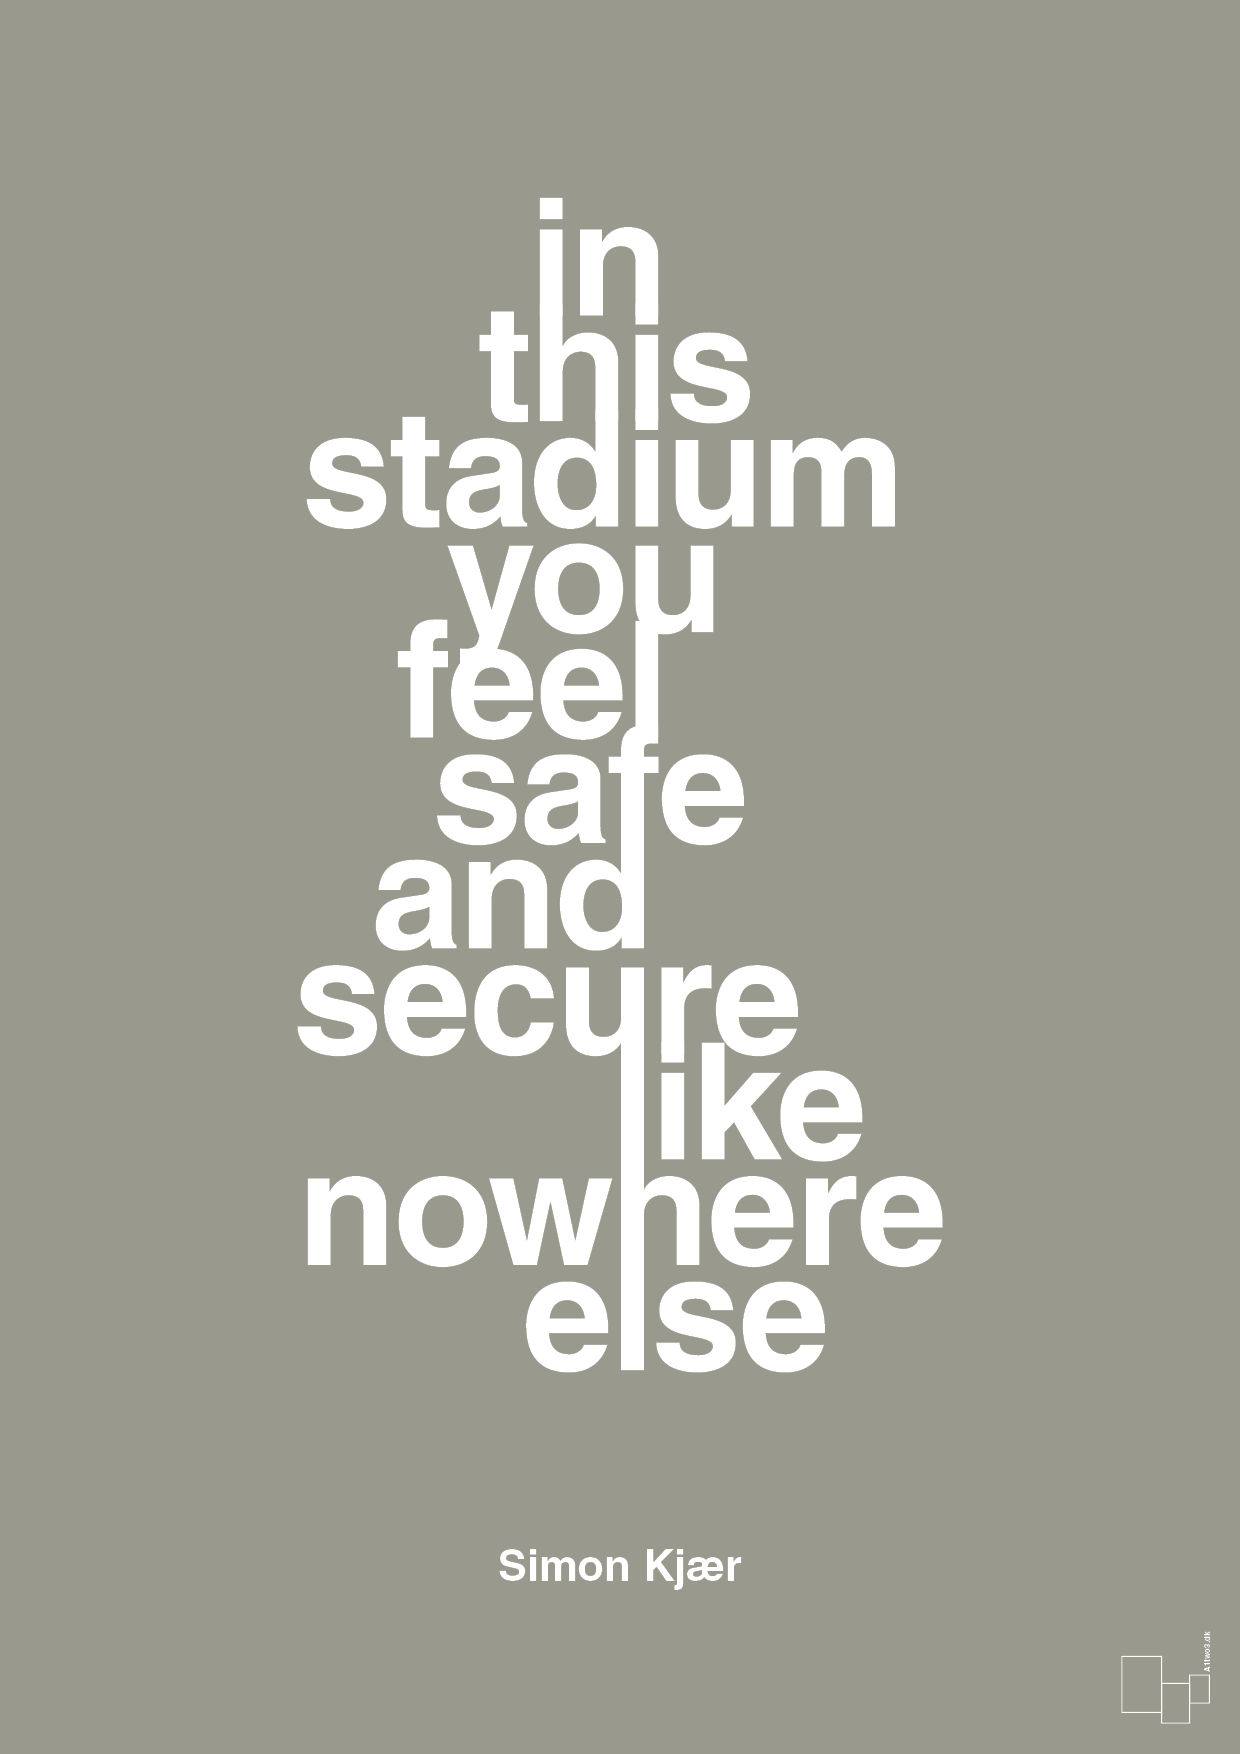 in this stadium you feel safe and secure like nowhere else - Plakat med Citater i Battleship Gray